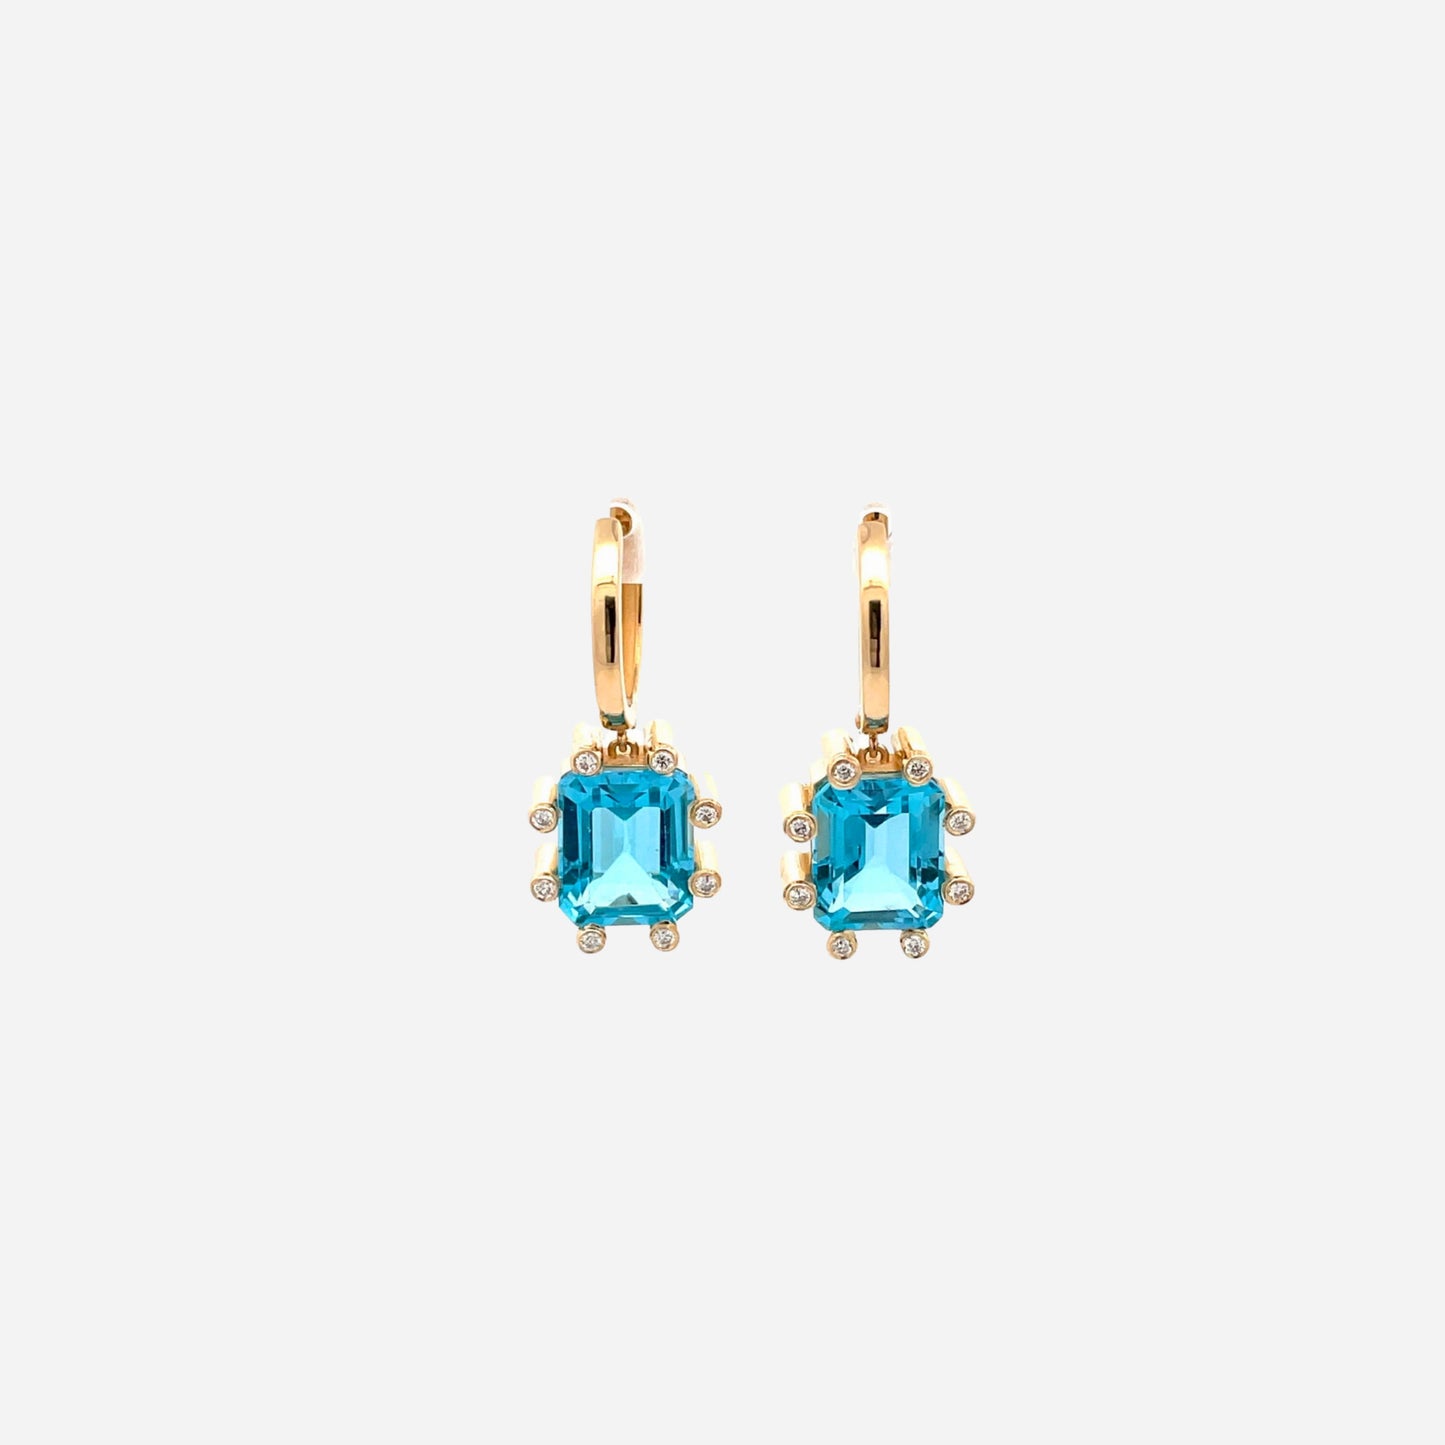 Swiss Blue Topaz and Diamond Earrings